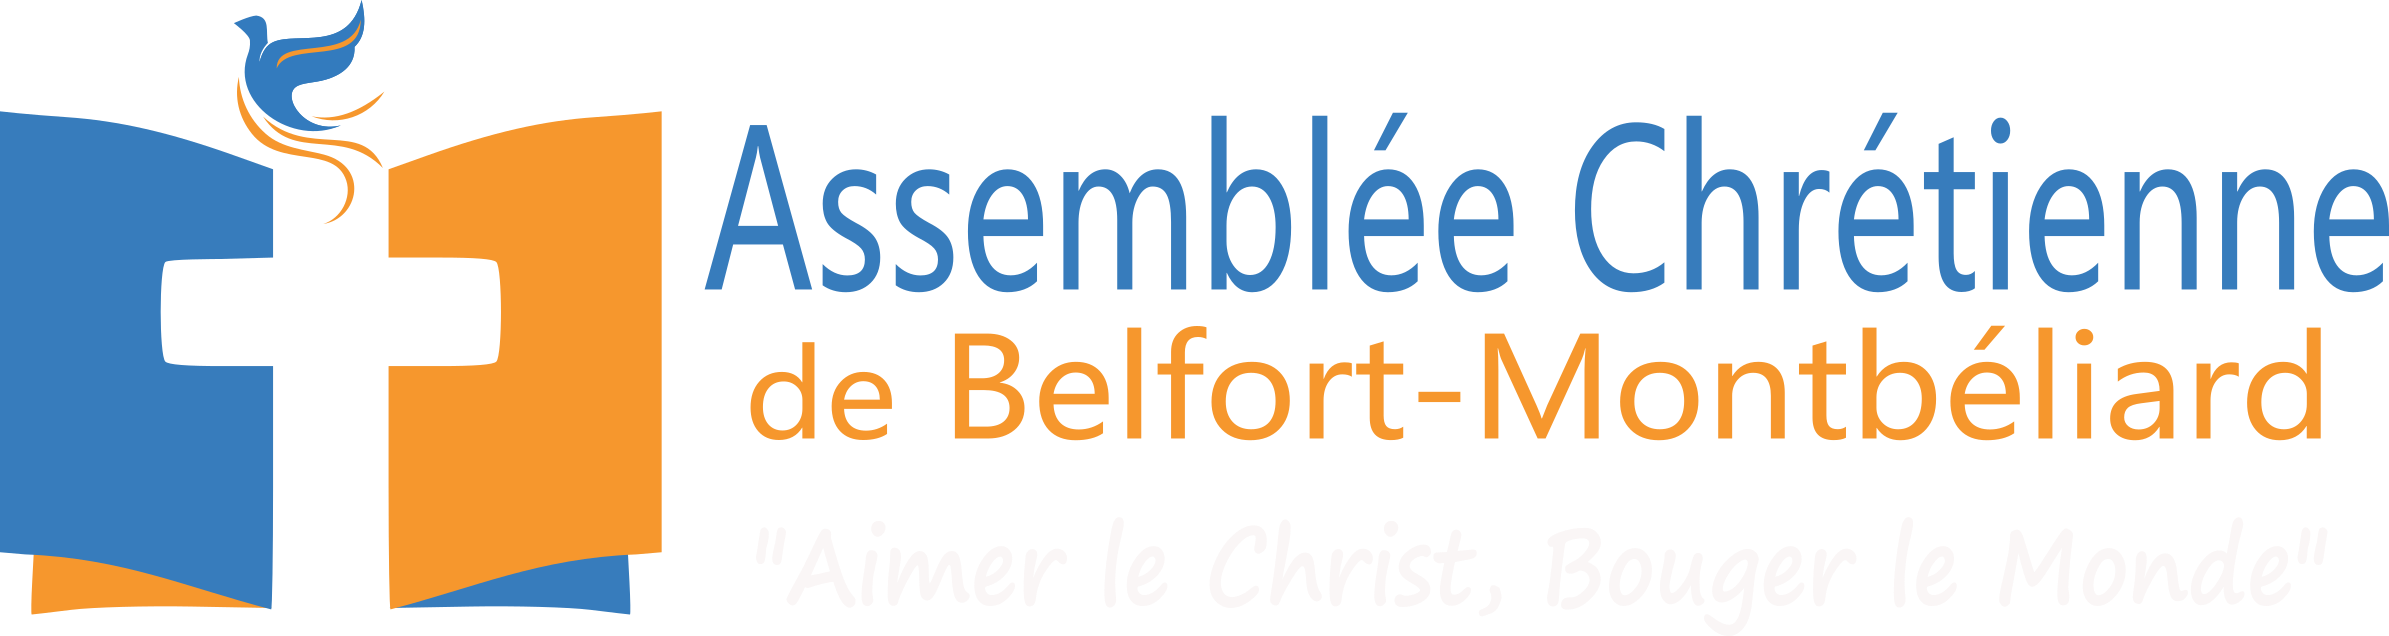 Assemblée Chrétienne de Belfort-Montbéliard